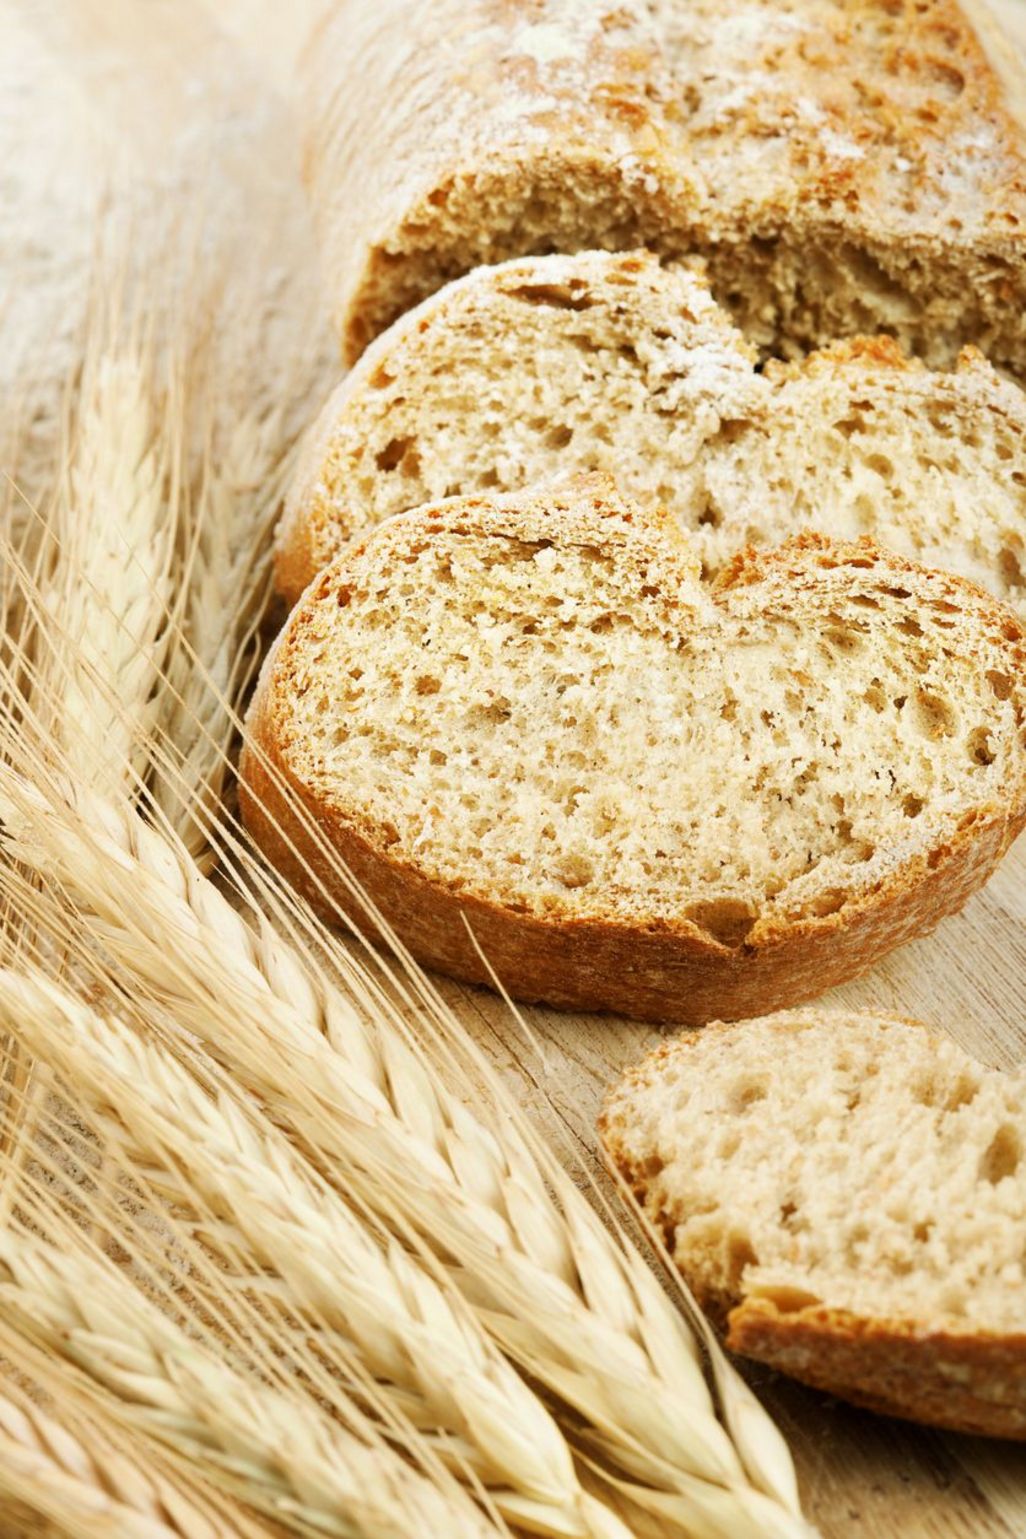 Weizen-Roggen-Brot kann man tatsächlich auch in der Heißluftfritteuse backen.